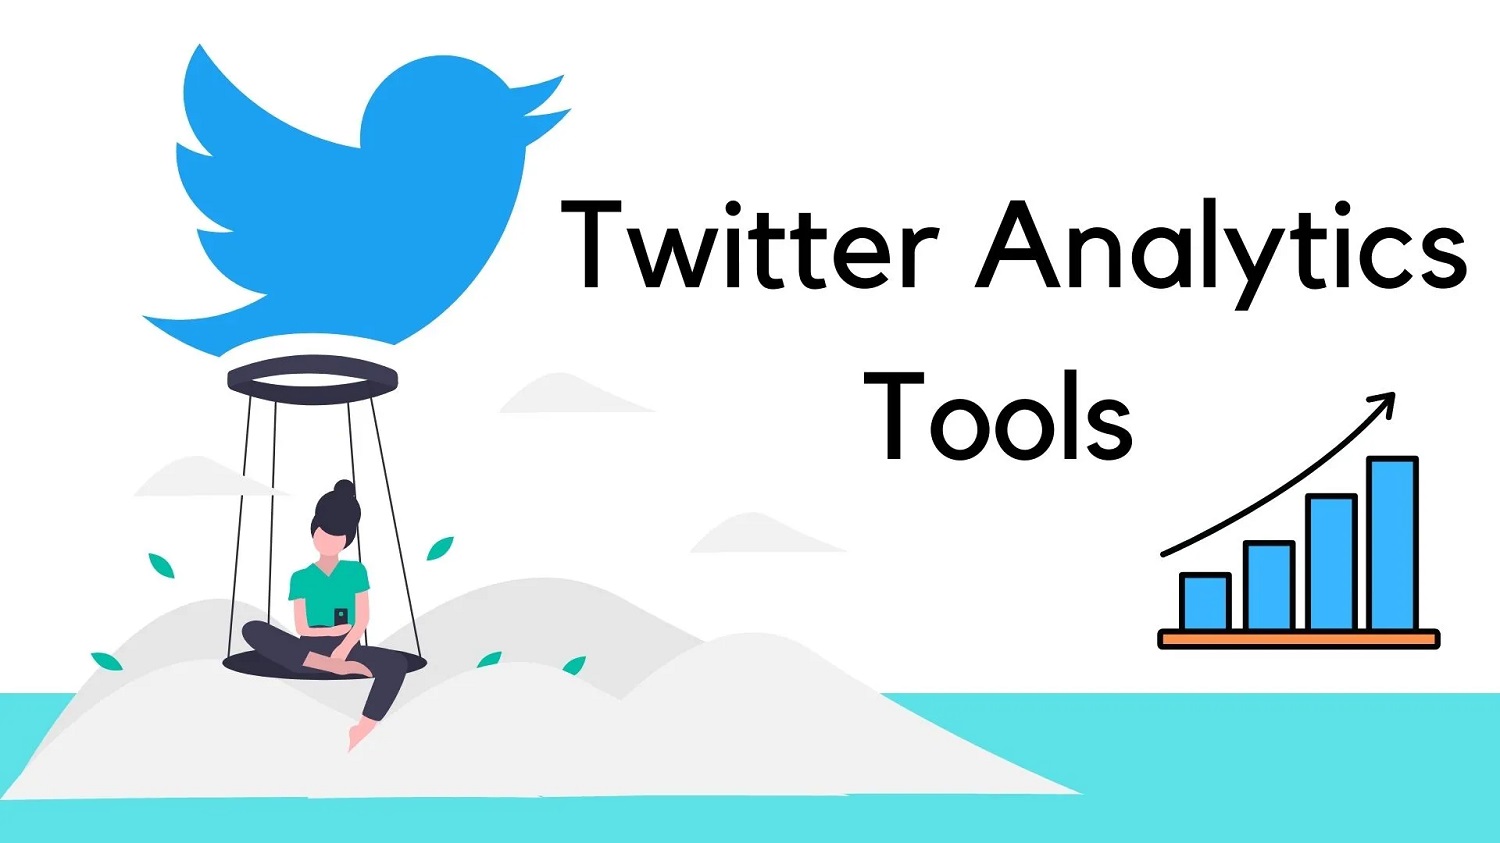 Twitter analytics tools